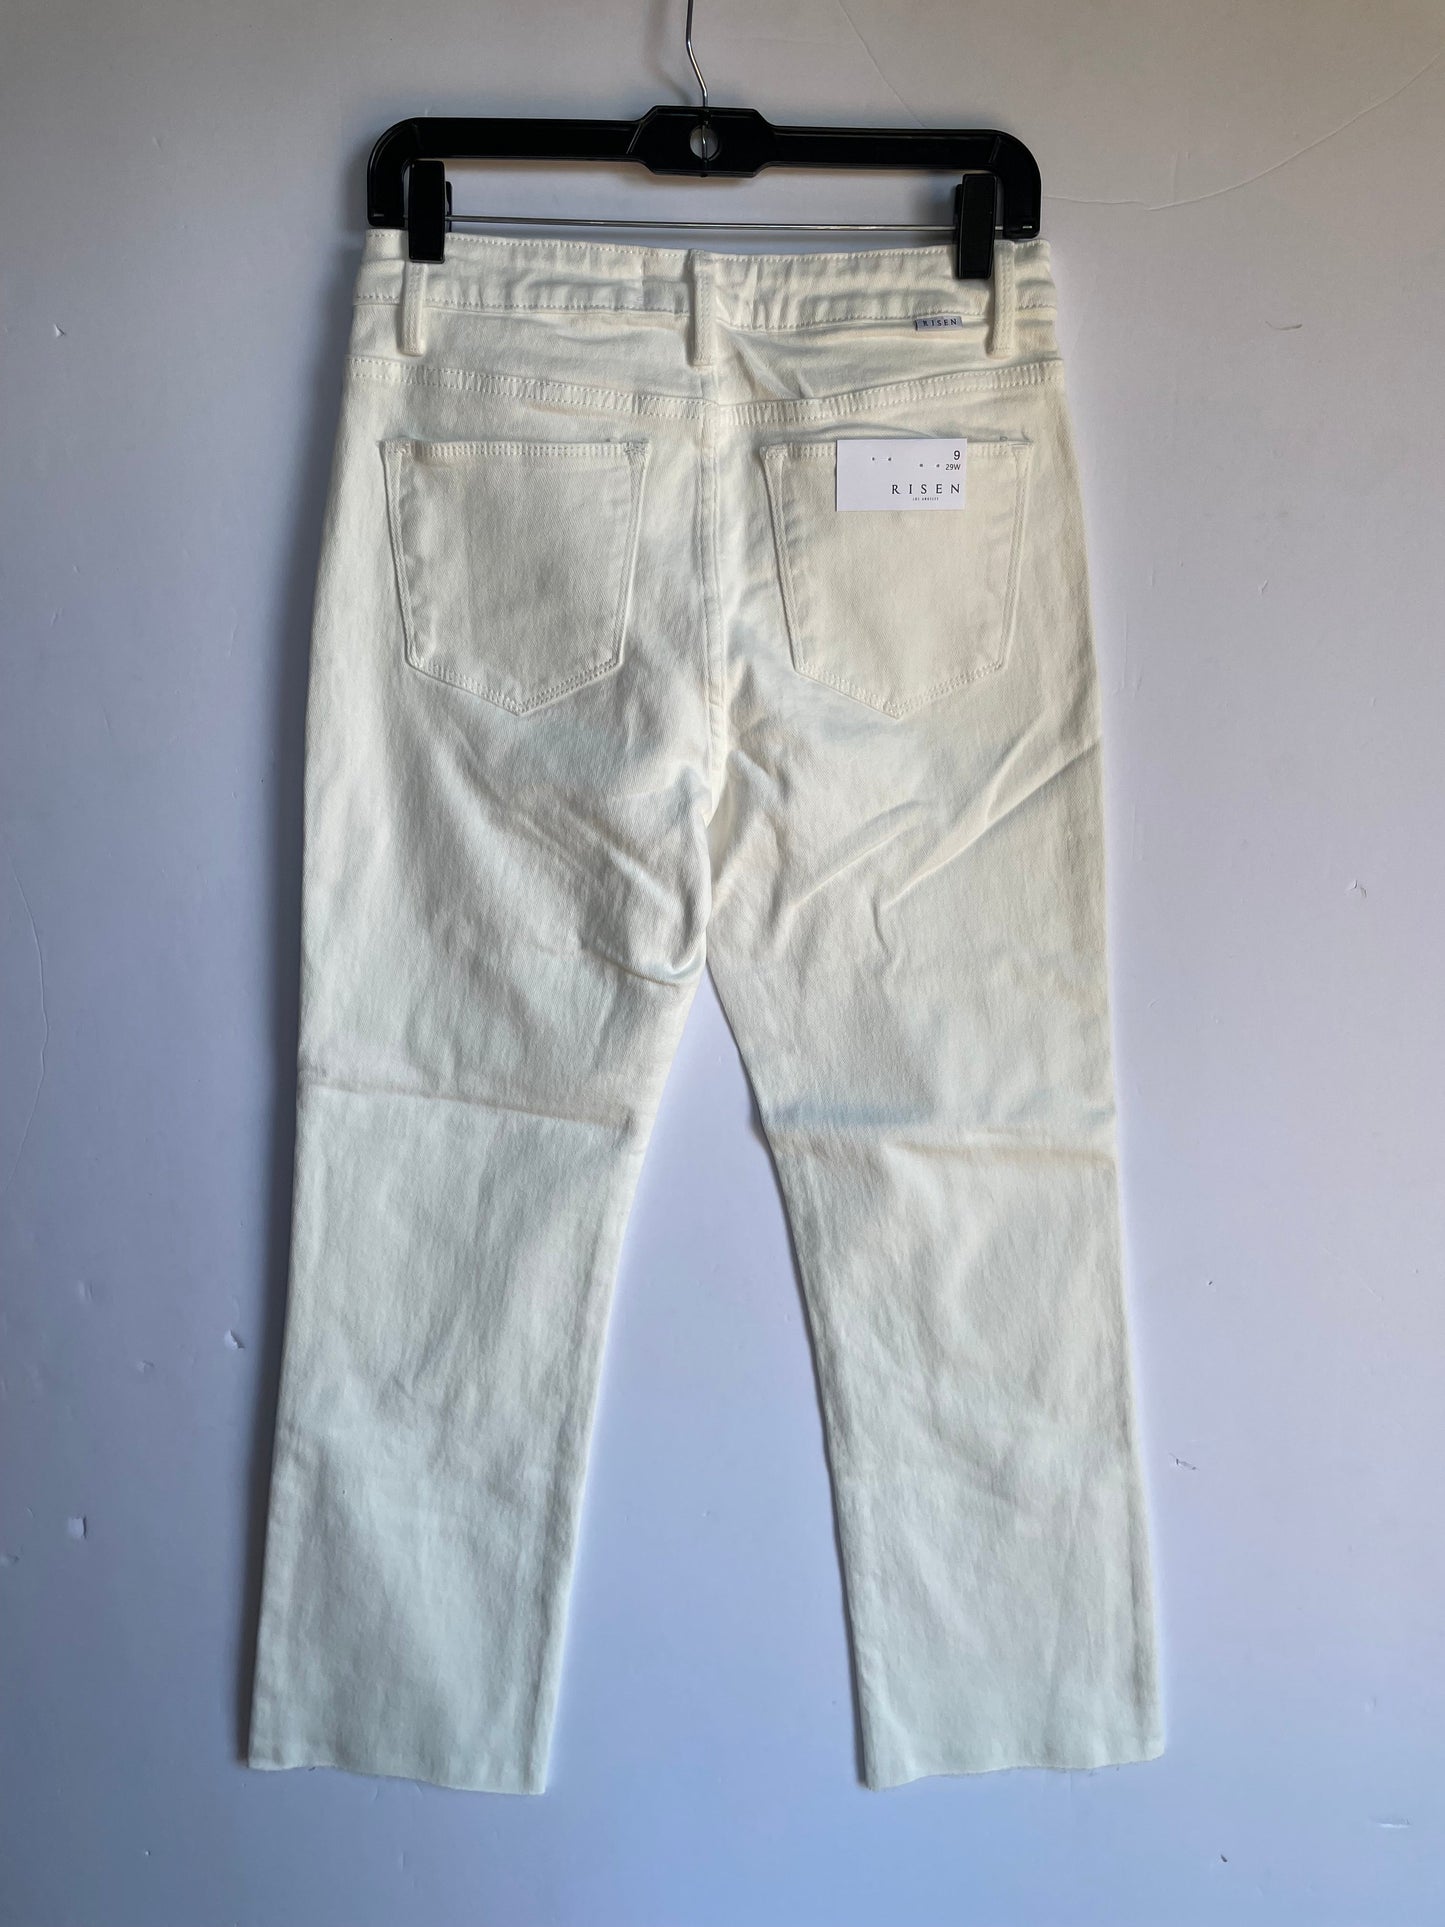 White Jeans Straight Risen, Size 6